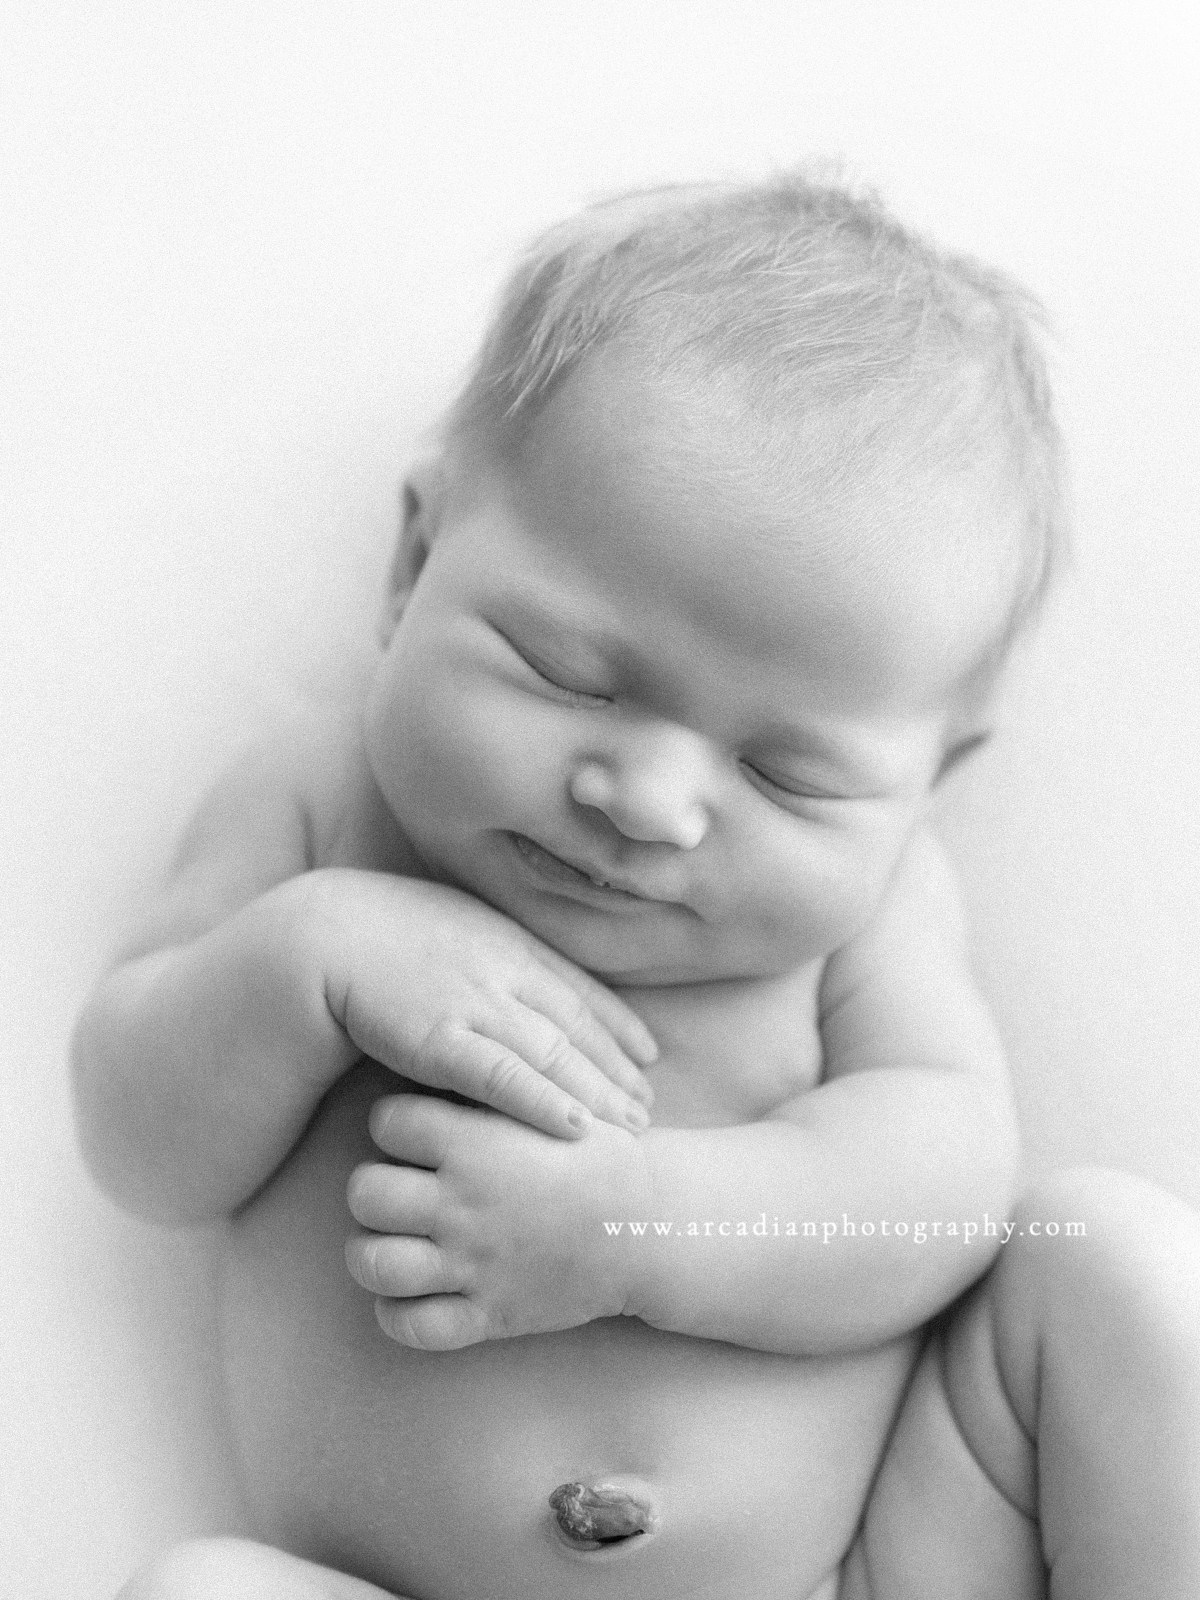 relaxed newborn posing - baby led posing